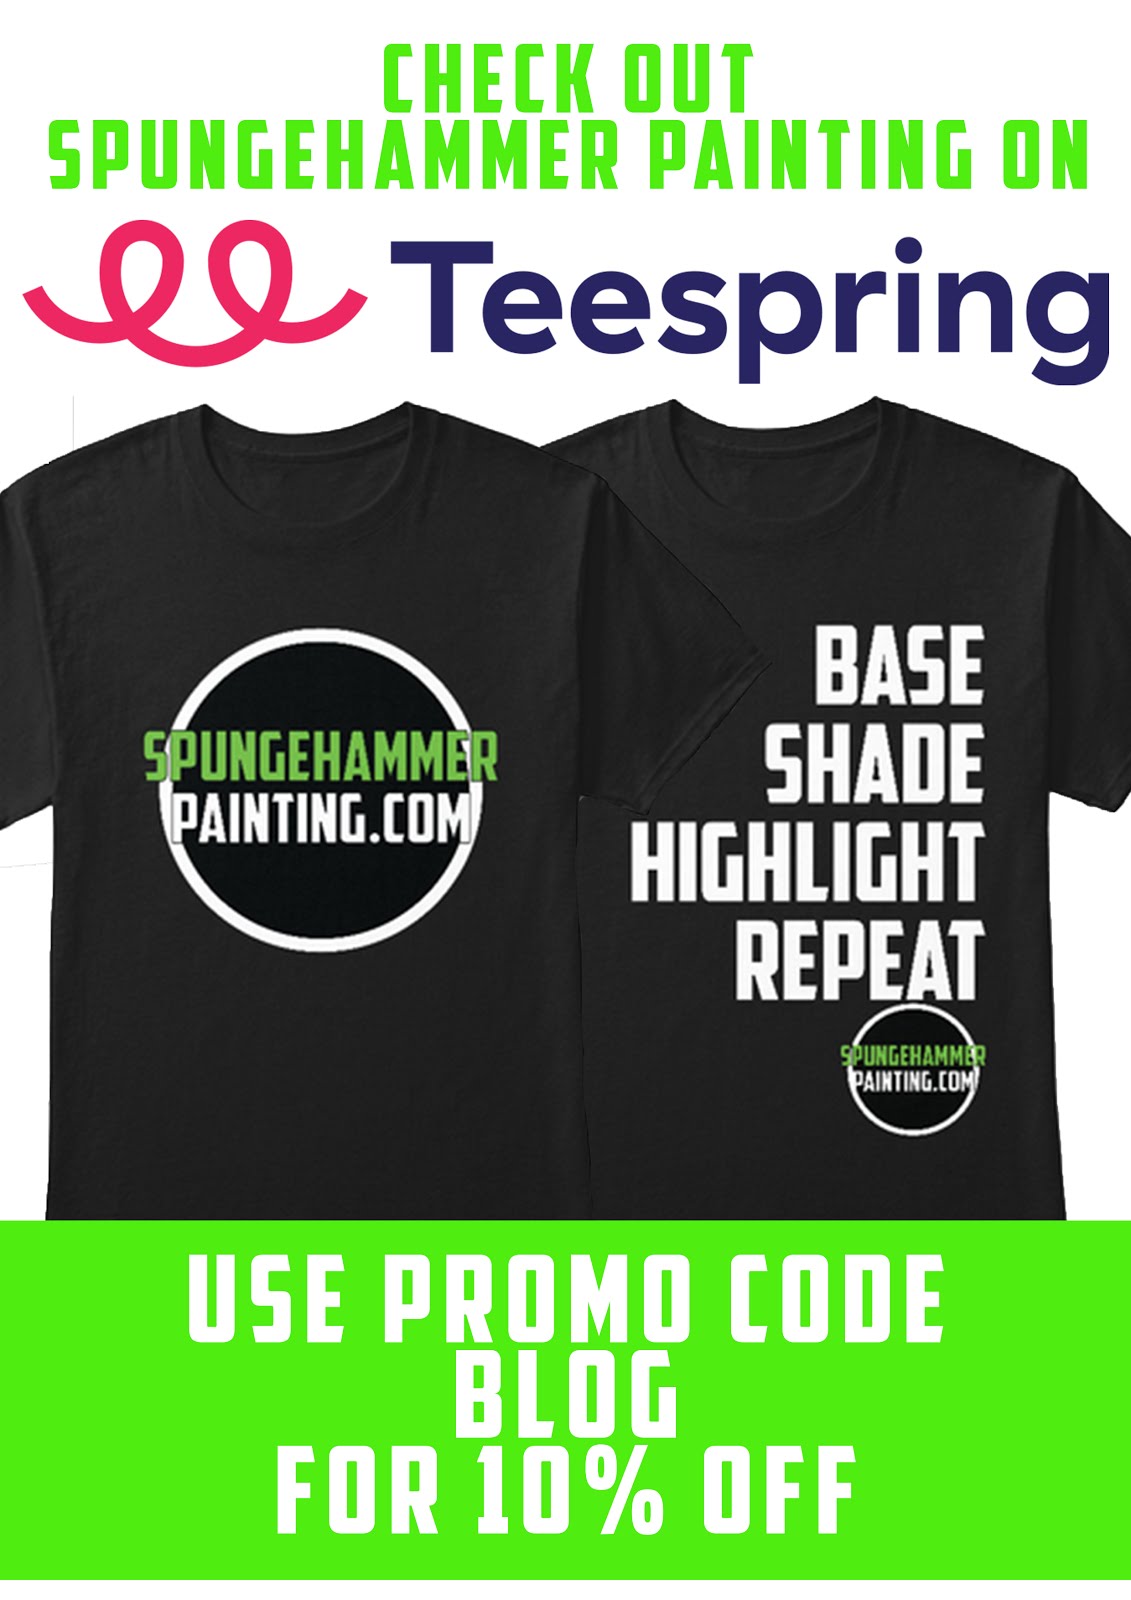 Spungehammer painting T-shirts